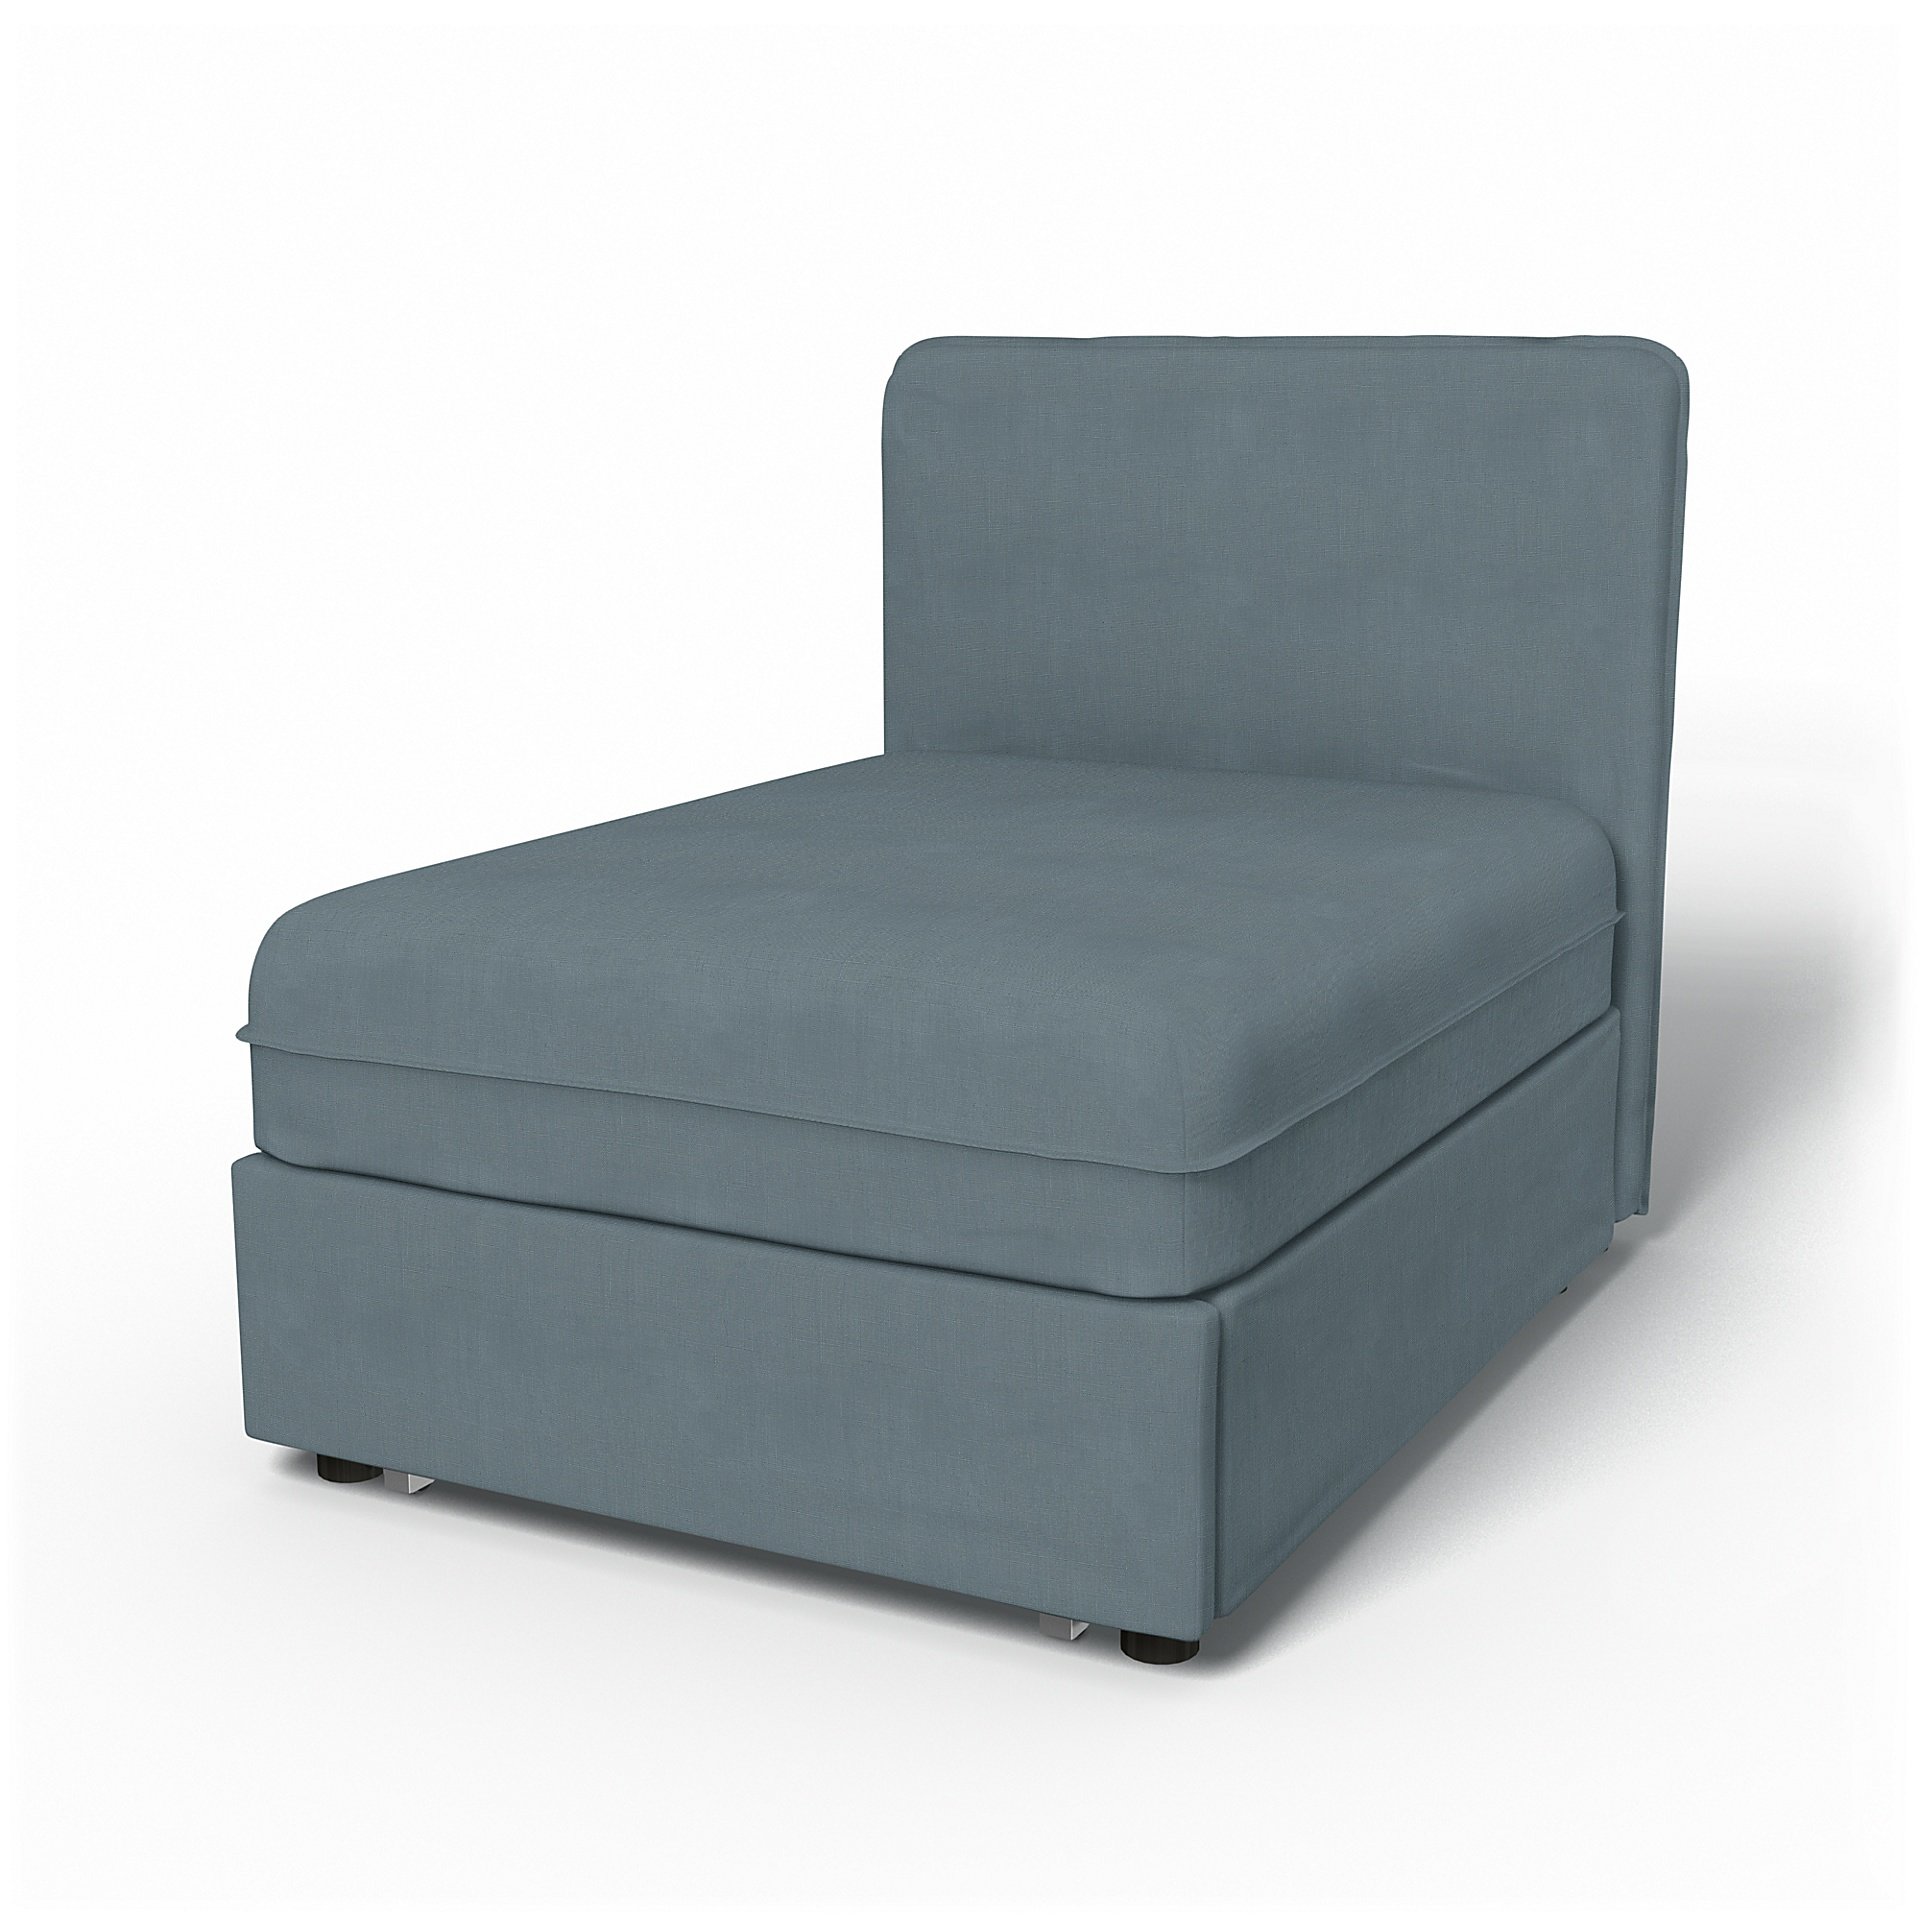 IKEA - Vallentuna Seat Module with Low Back Sofa Bed Cover 80x100 cm 32x39in, Dusk, Linen - Bemz